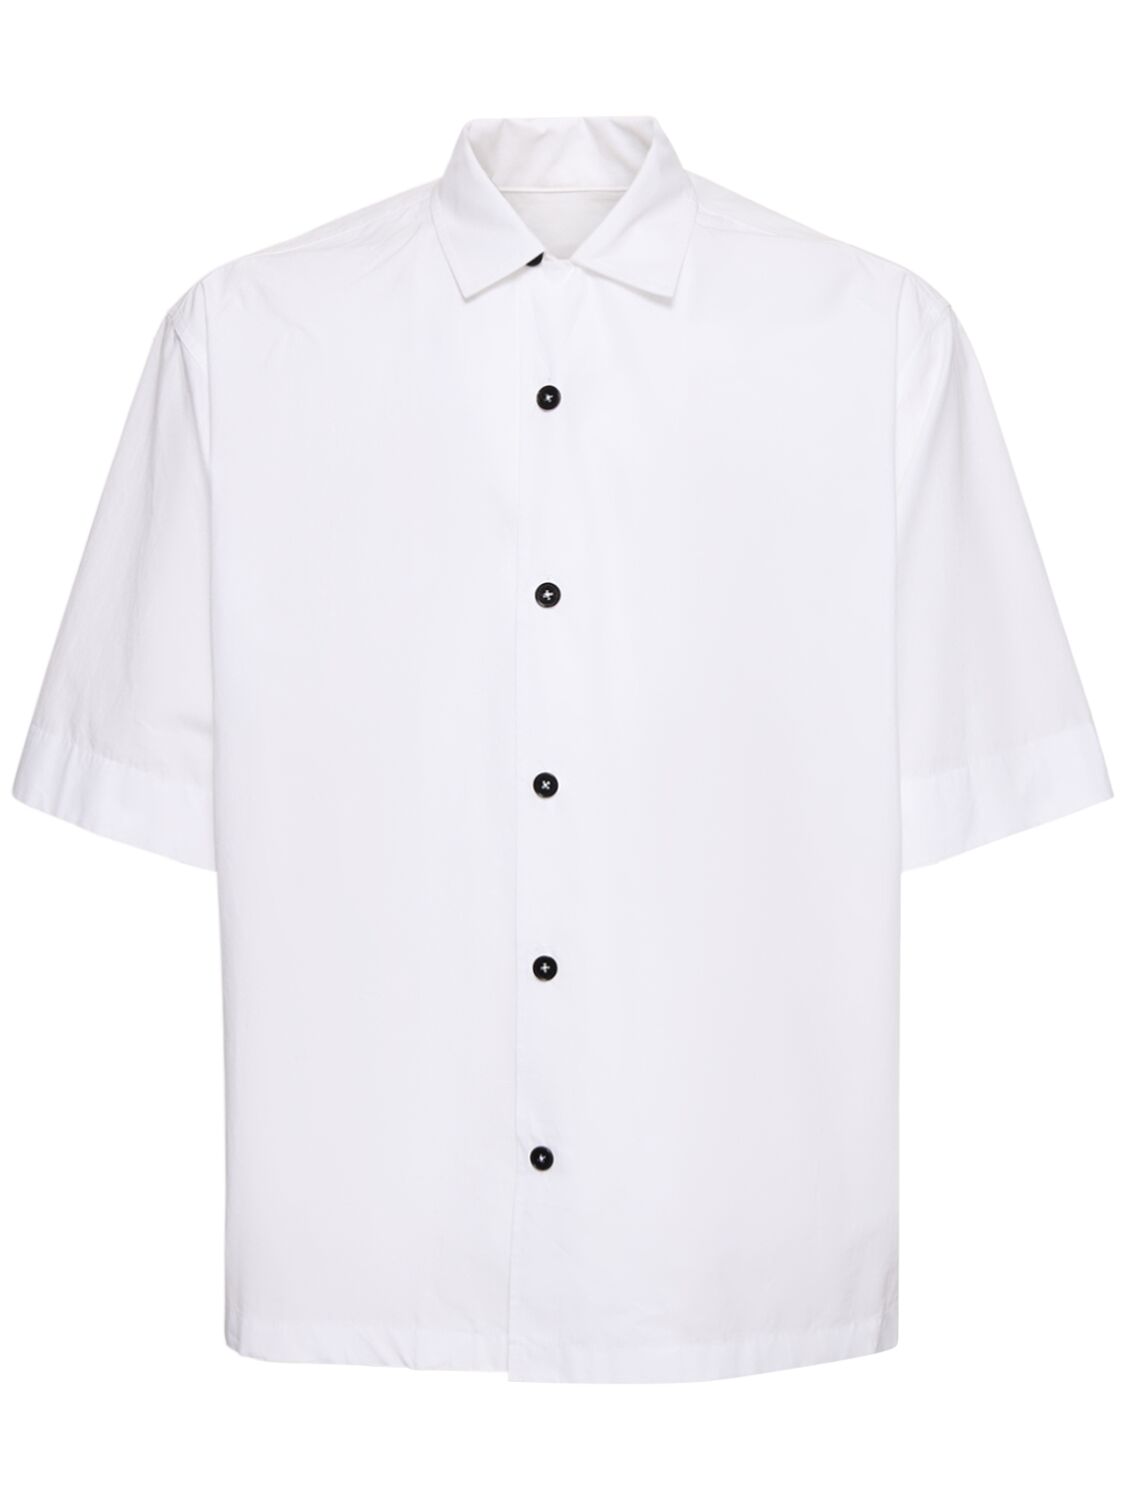 Image of Cotton Short Sleeved Shirt